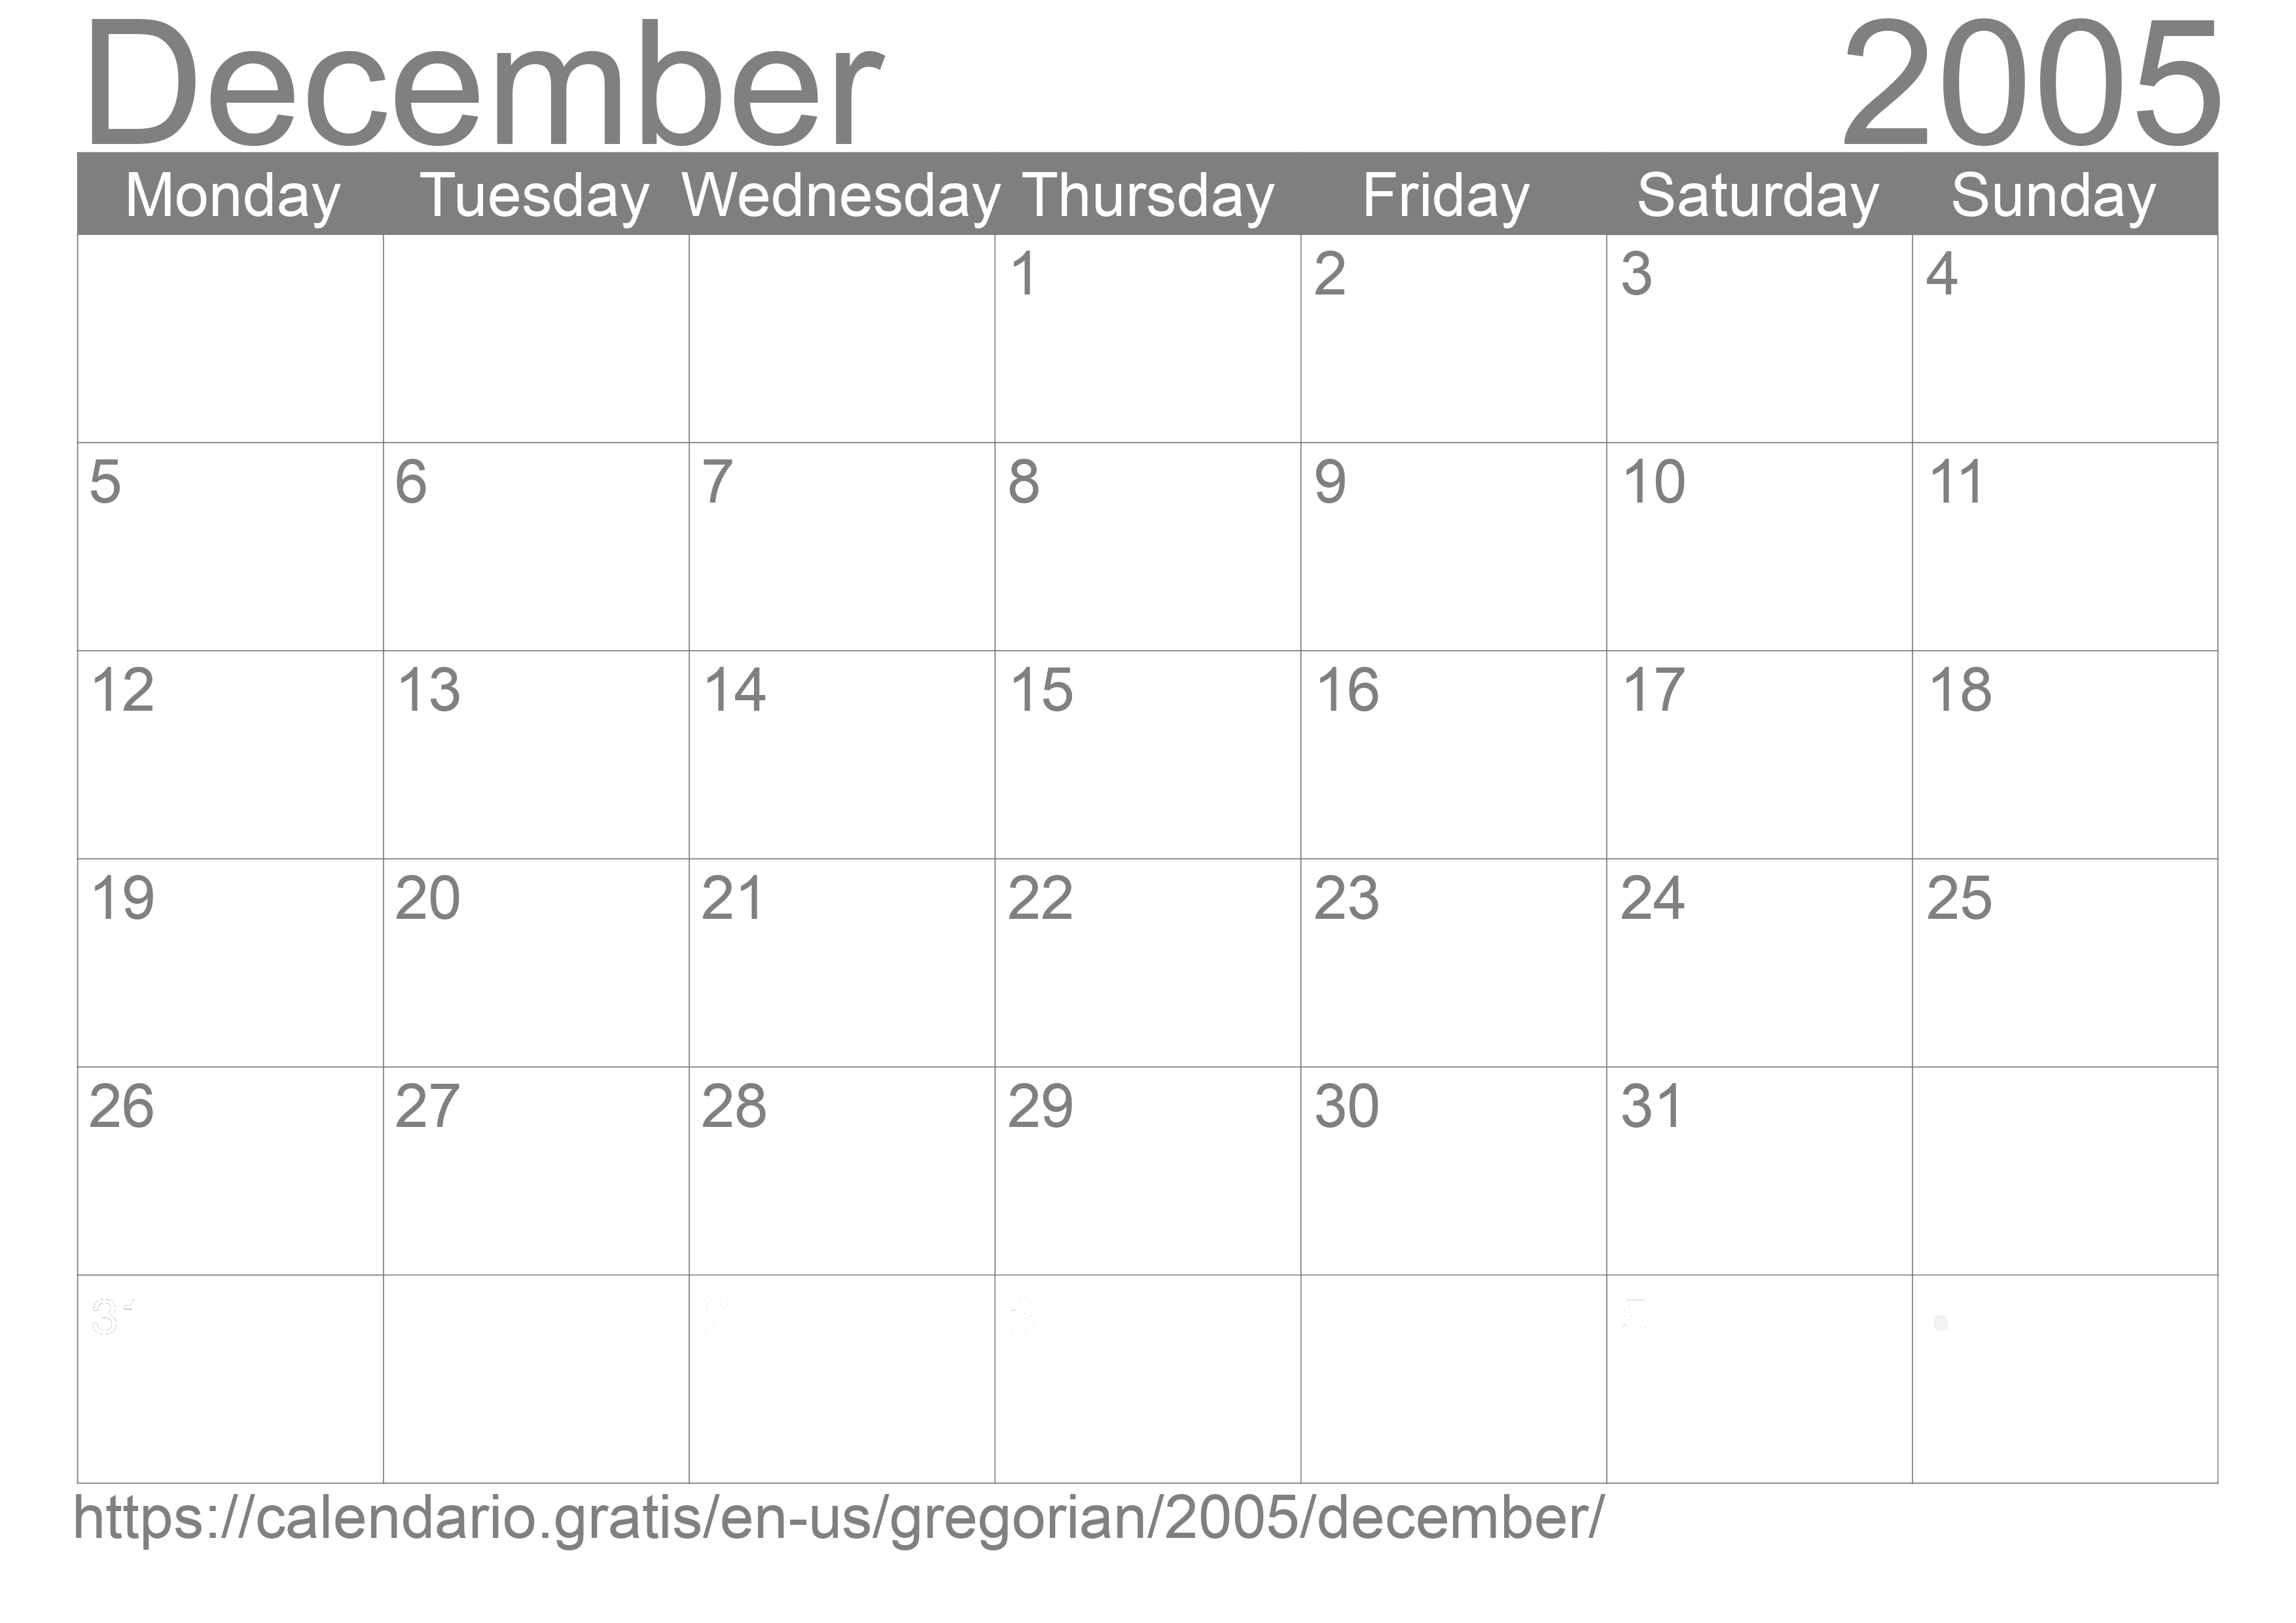 Calendar December 2005 to print